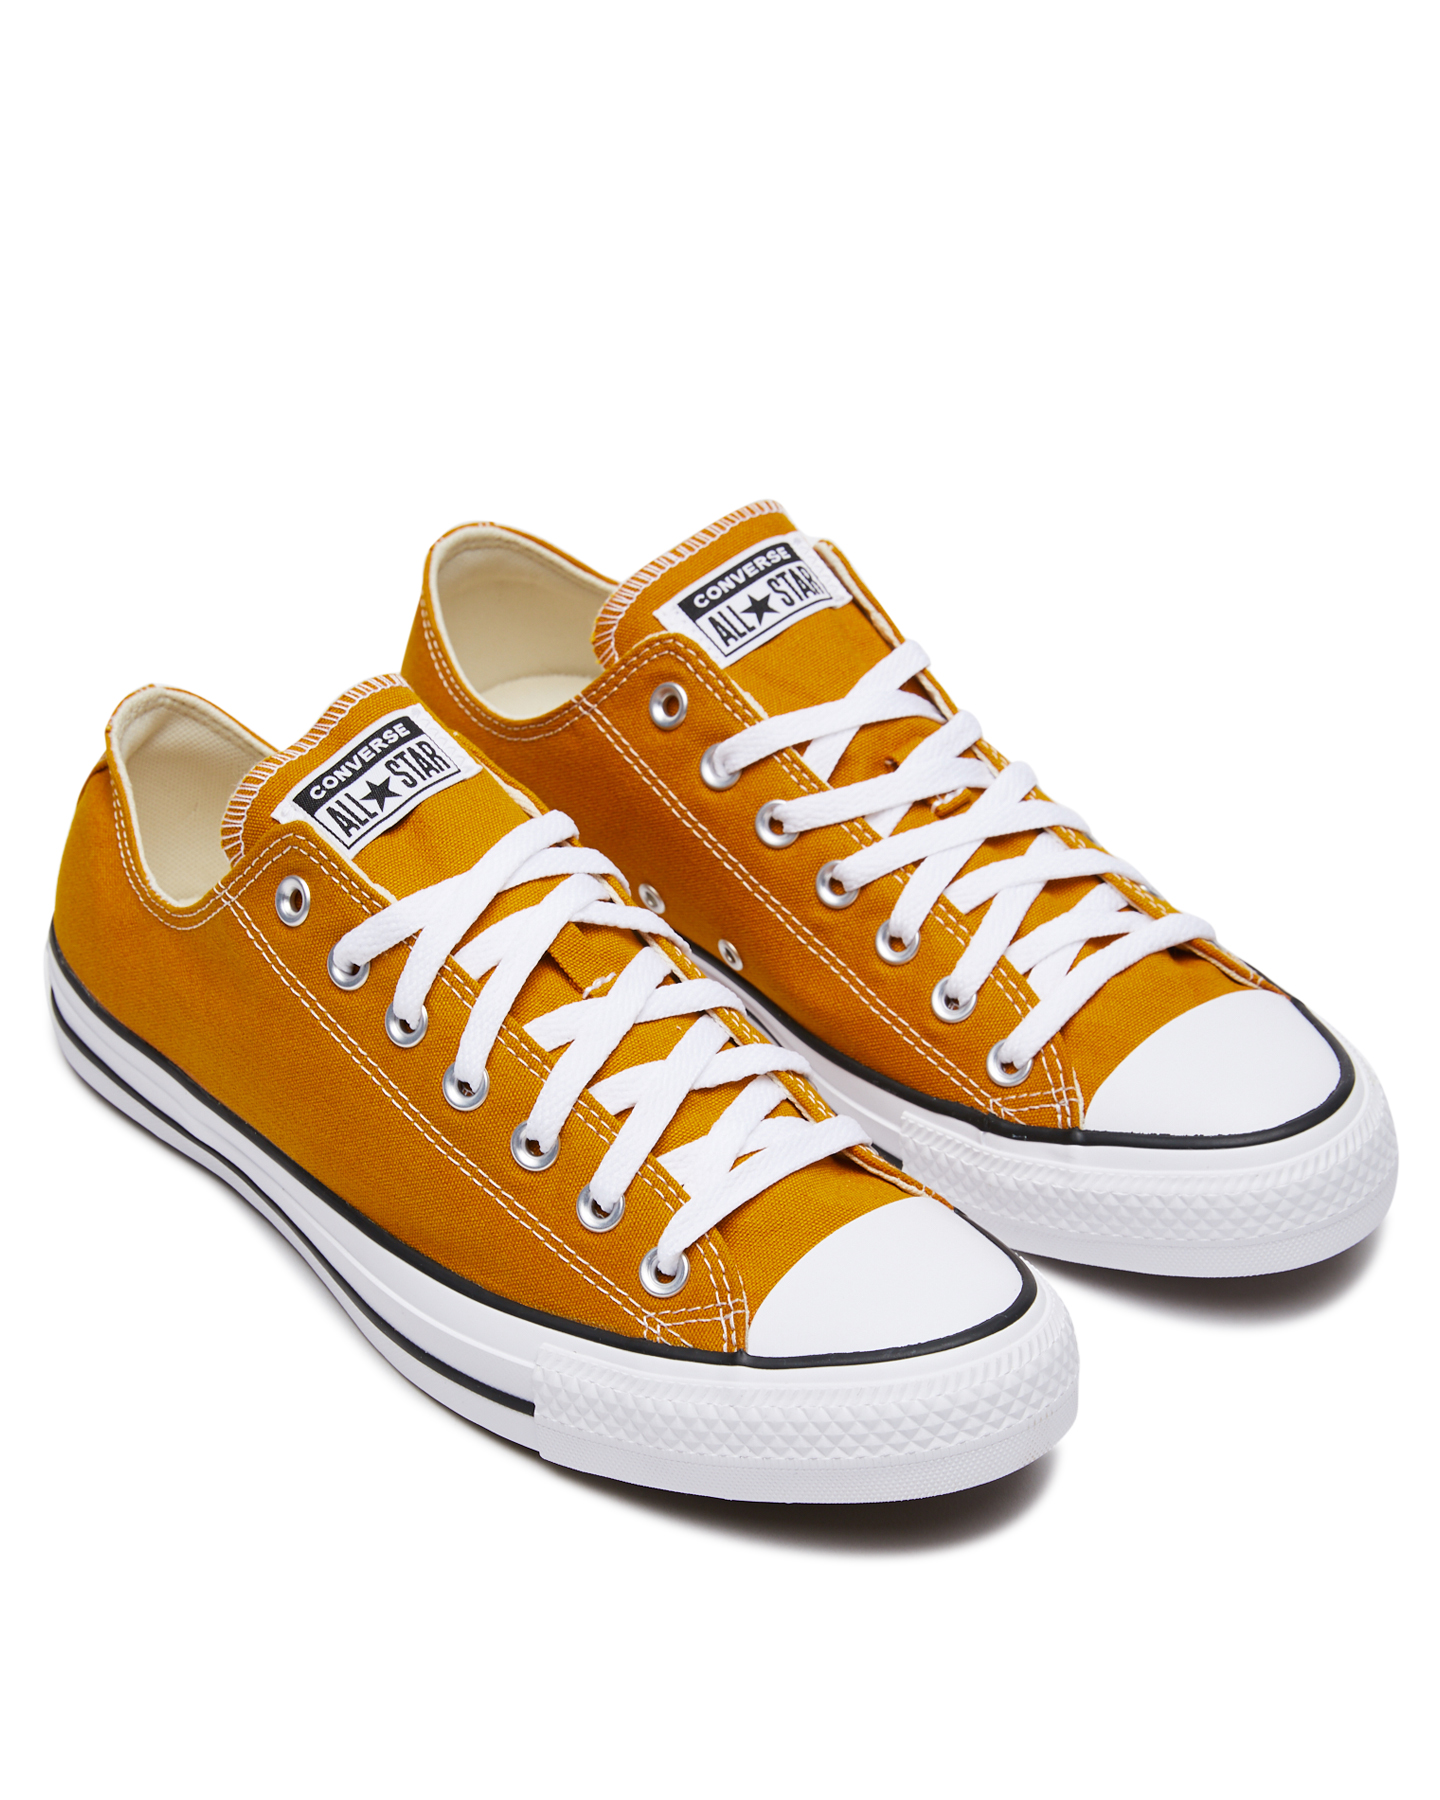 converse-womens-chuck-taylor-all-star-lo-shoe-saffron-yellow-surfstitch